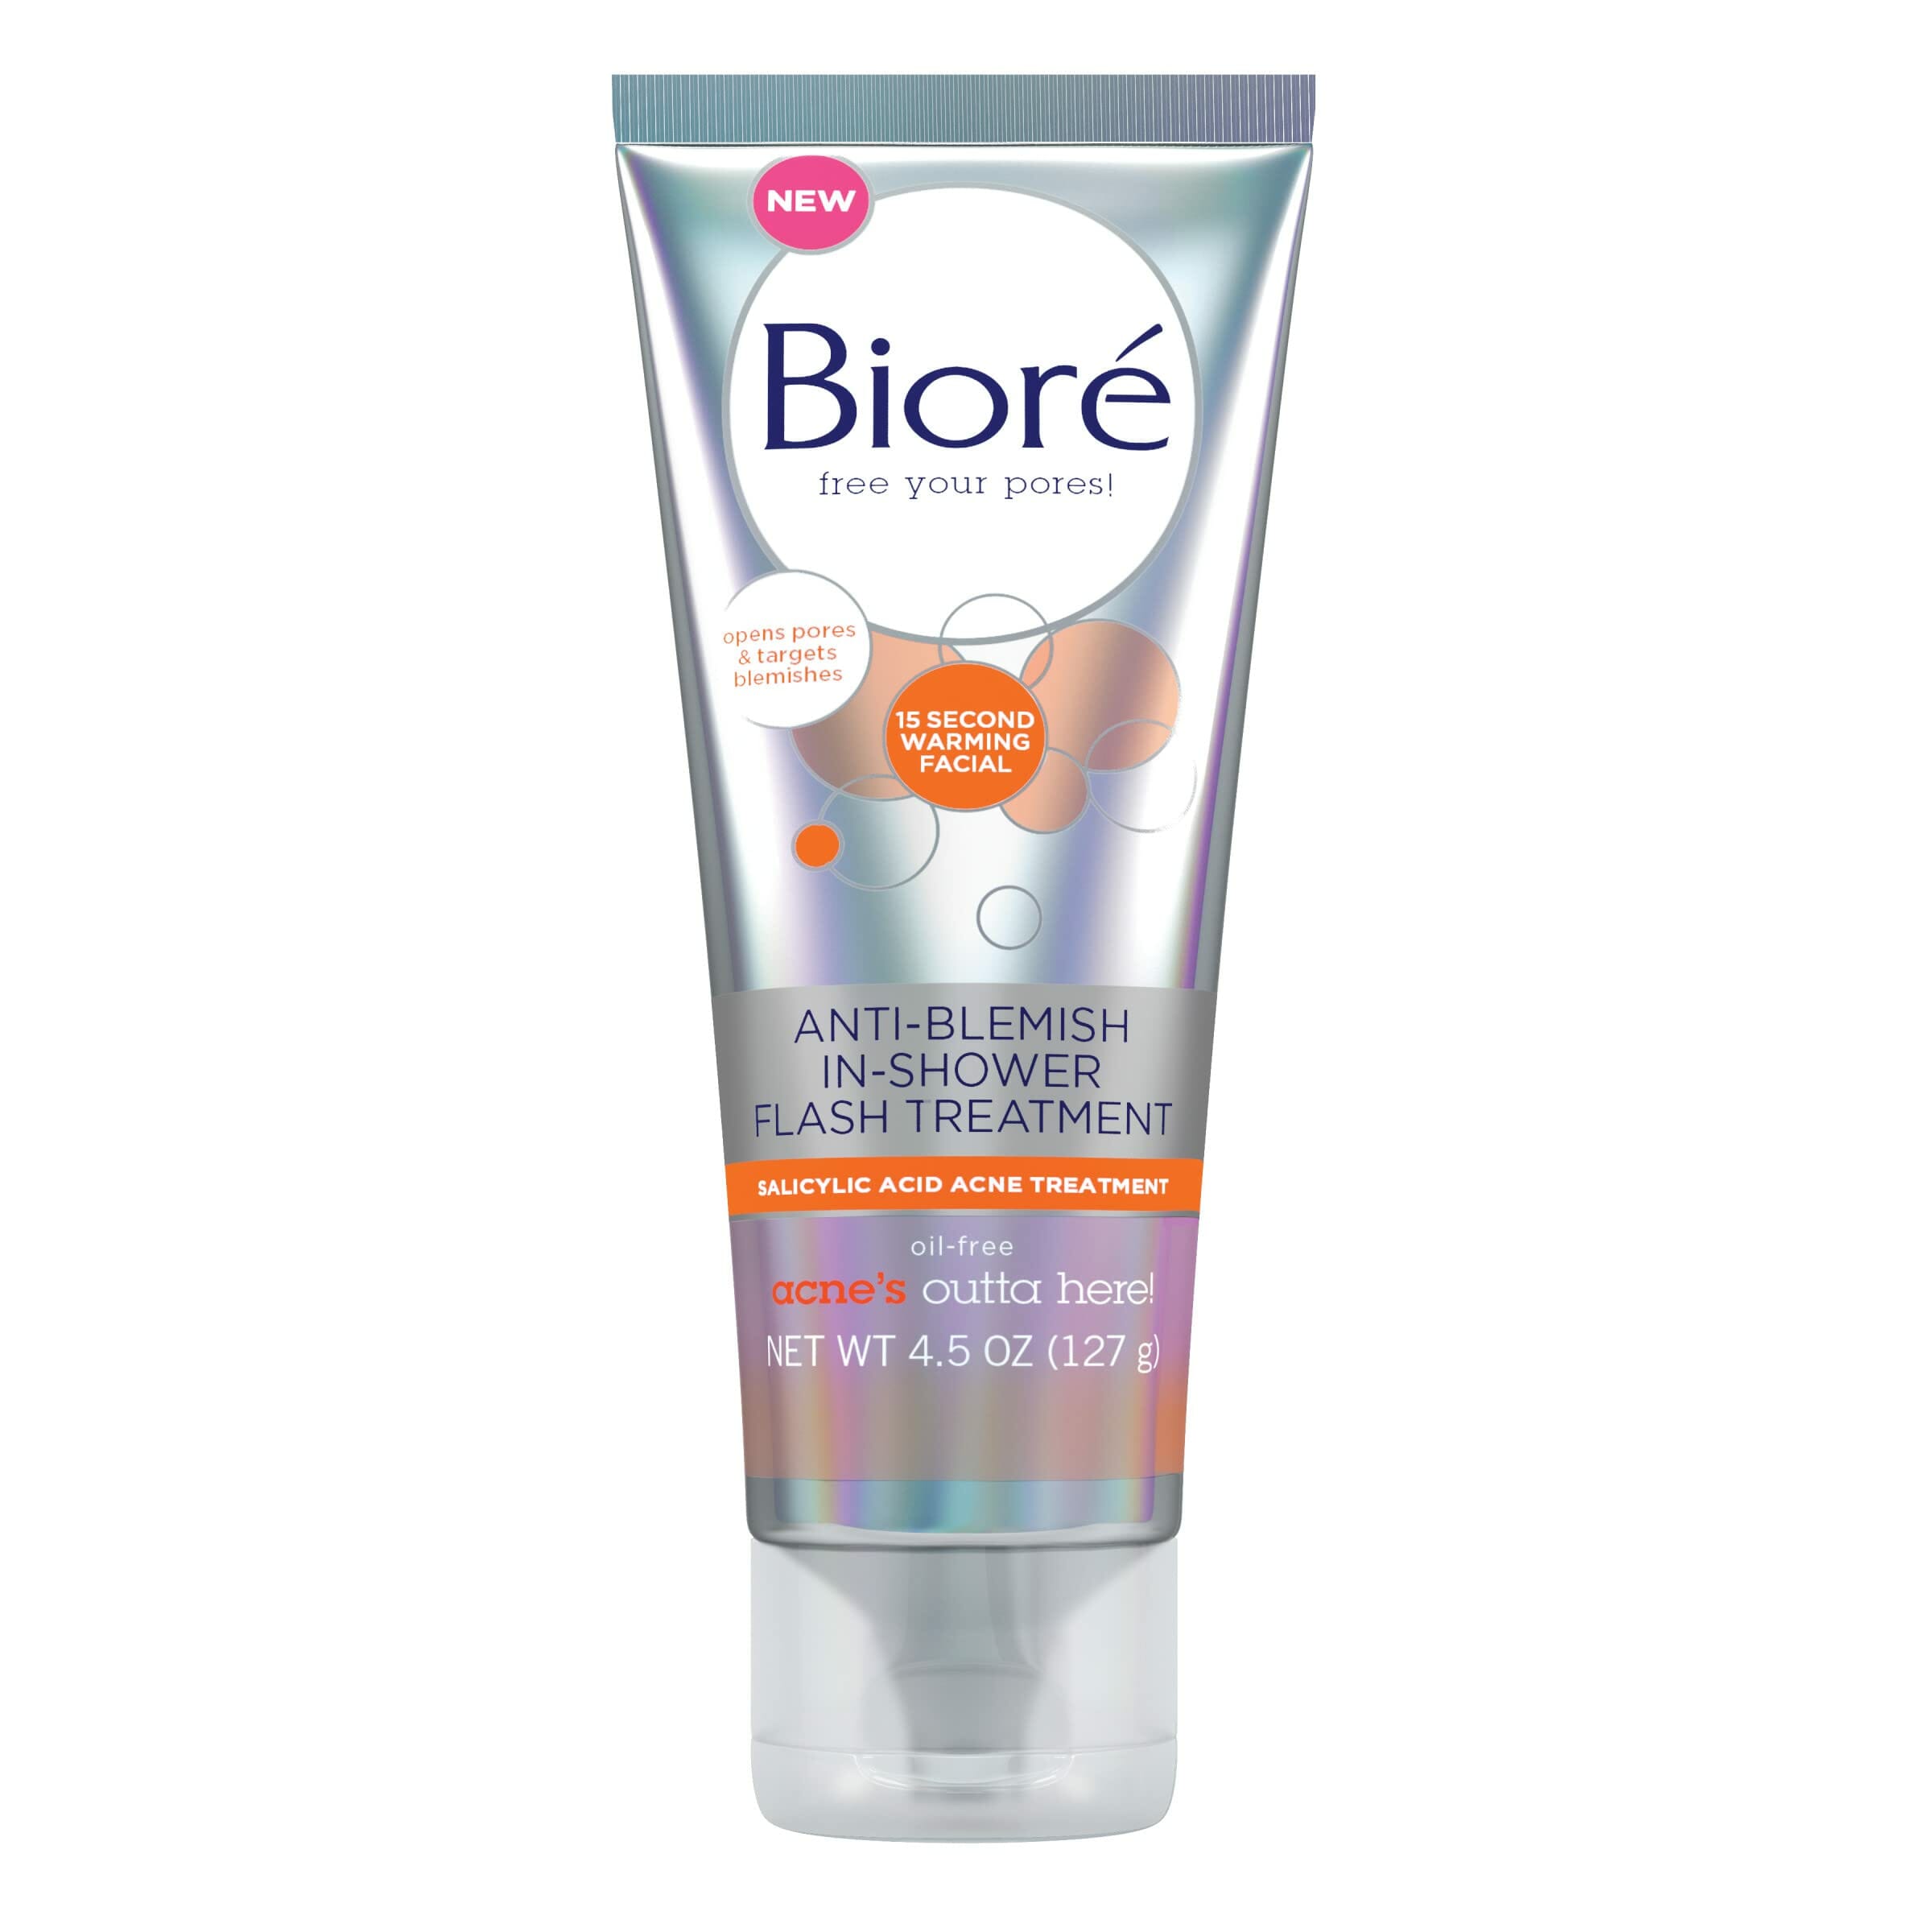 Biore anti-blemish flash treatment